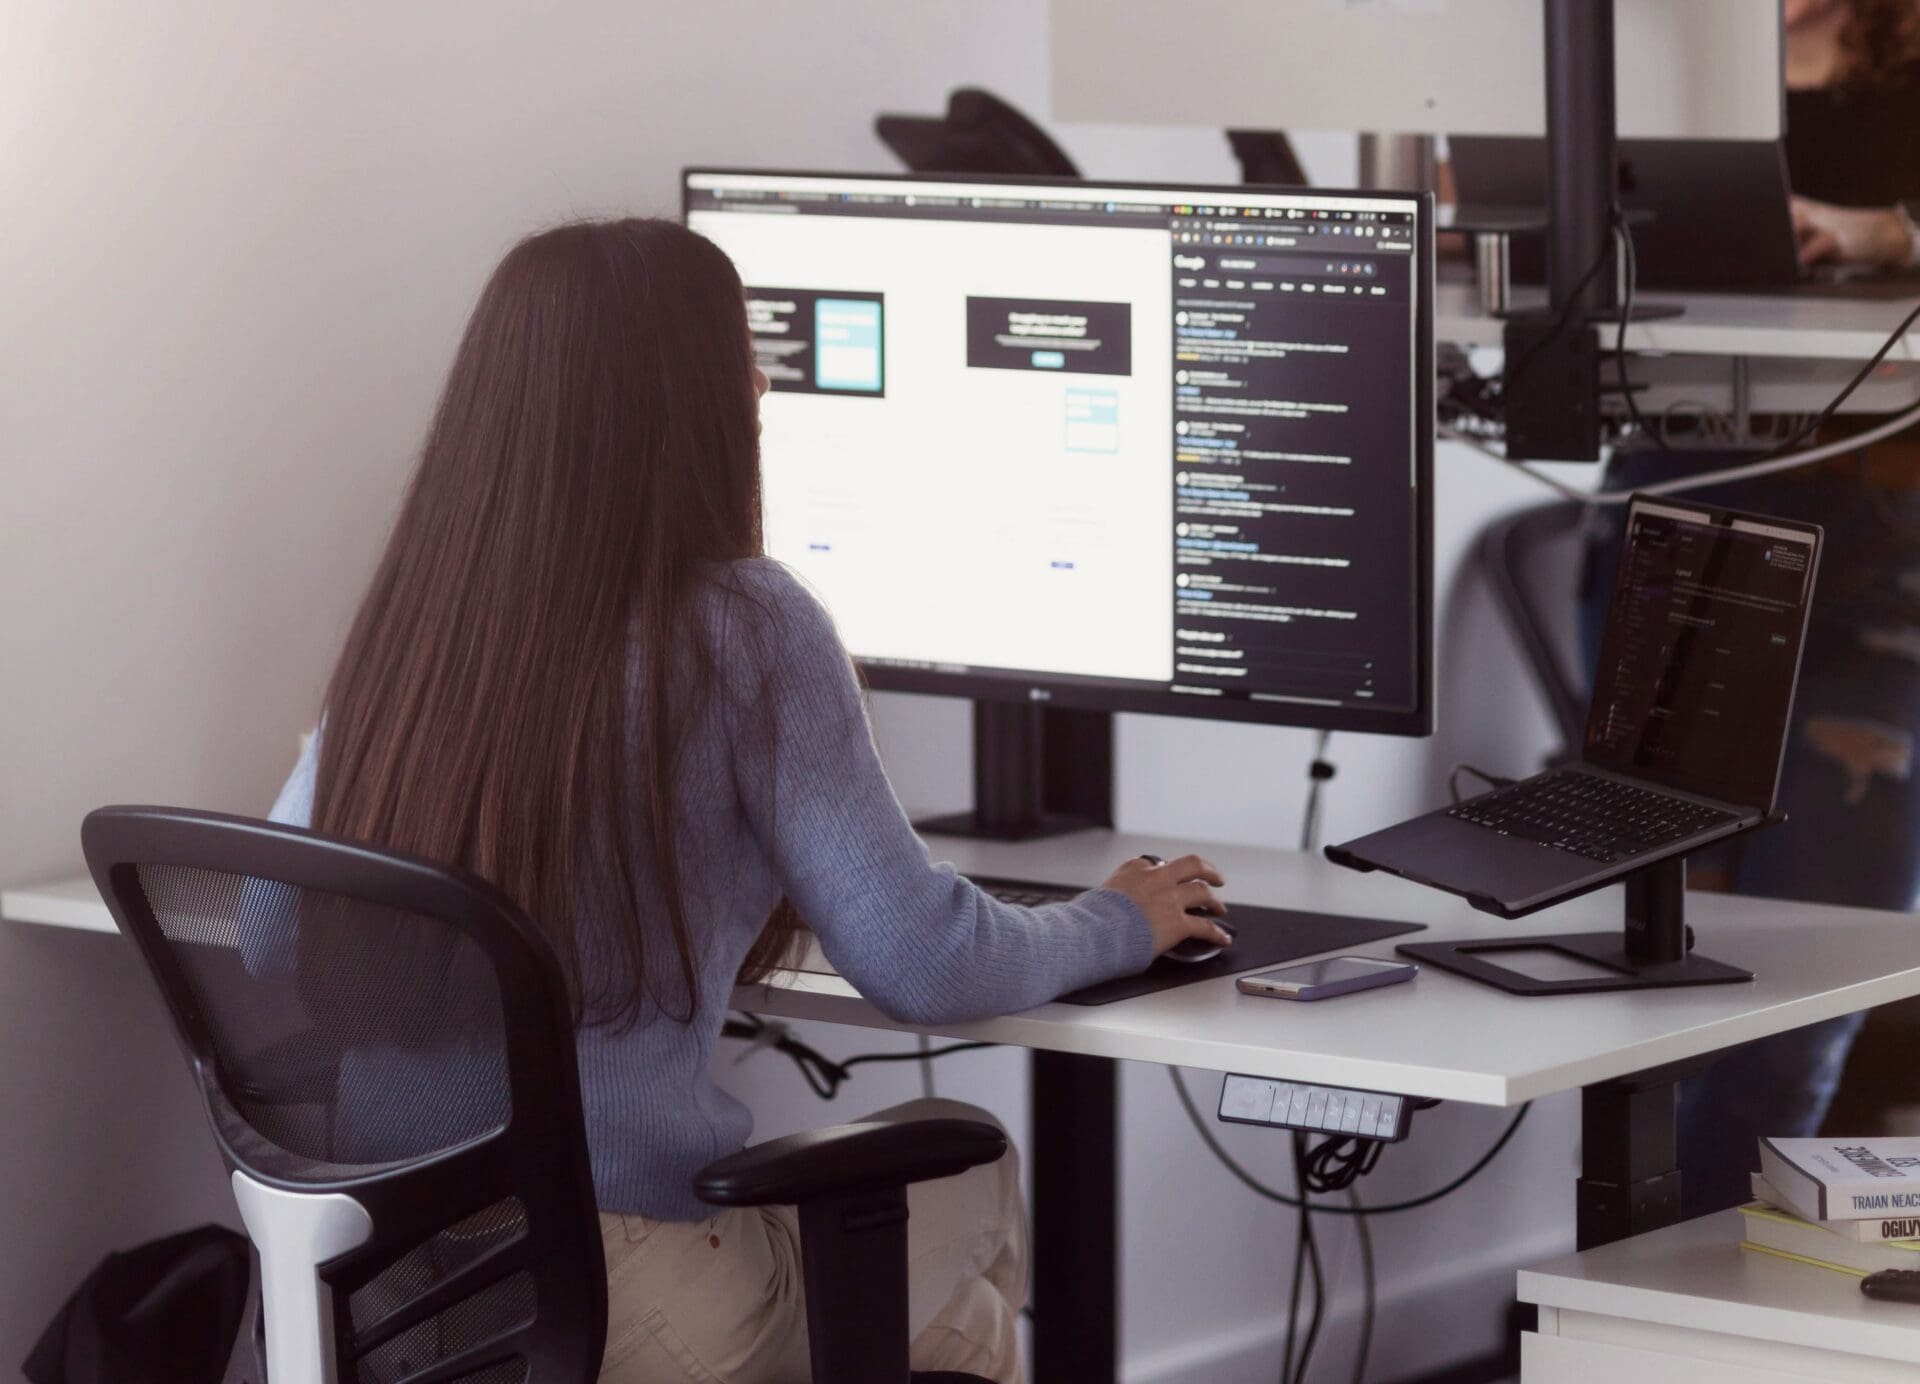 Woman with long dark hair looking at a computer screen